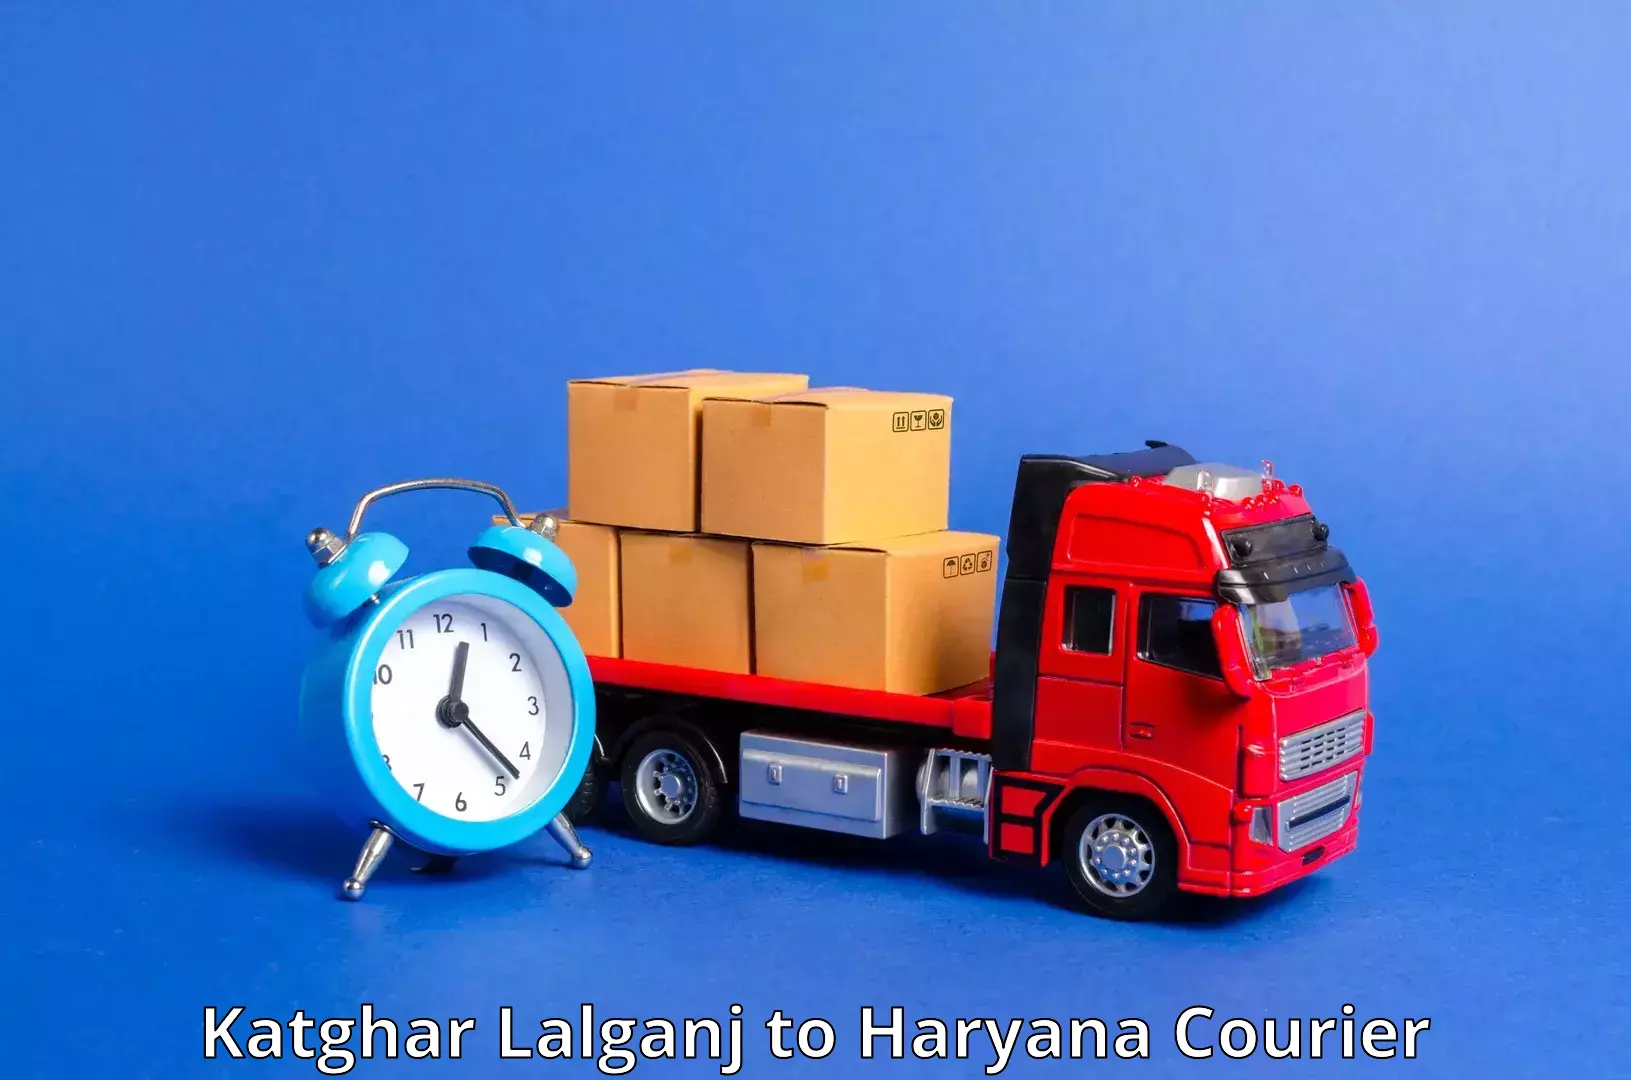 Holiday shipping services Katghar Lalganj to Gurgaon